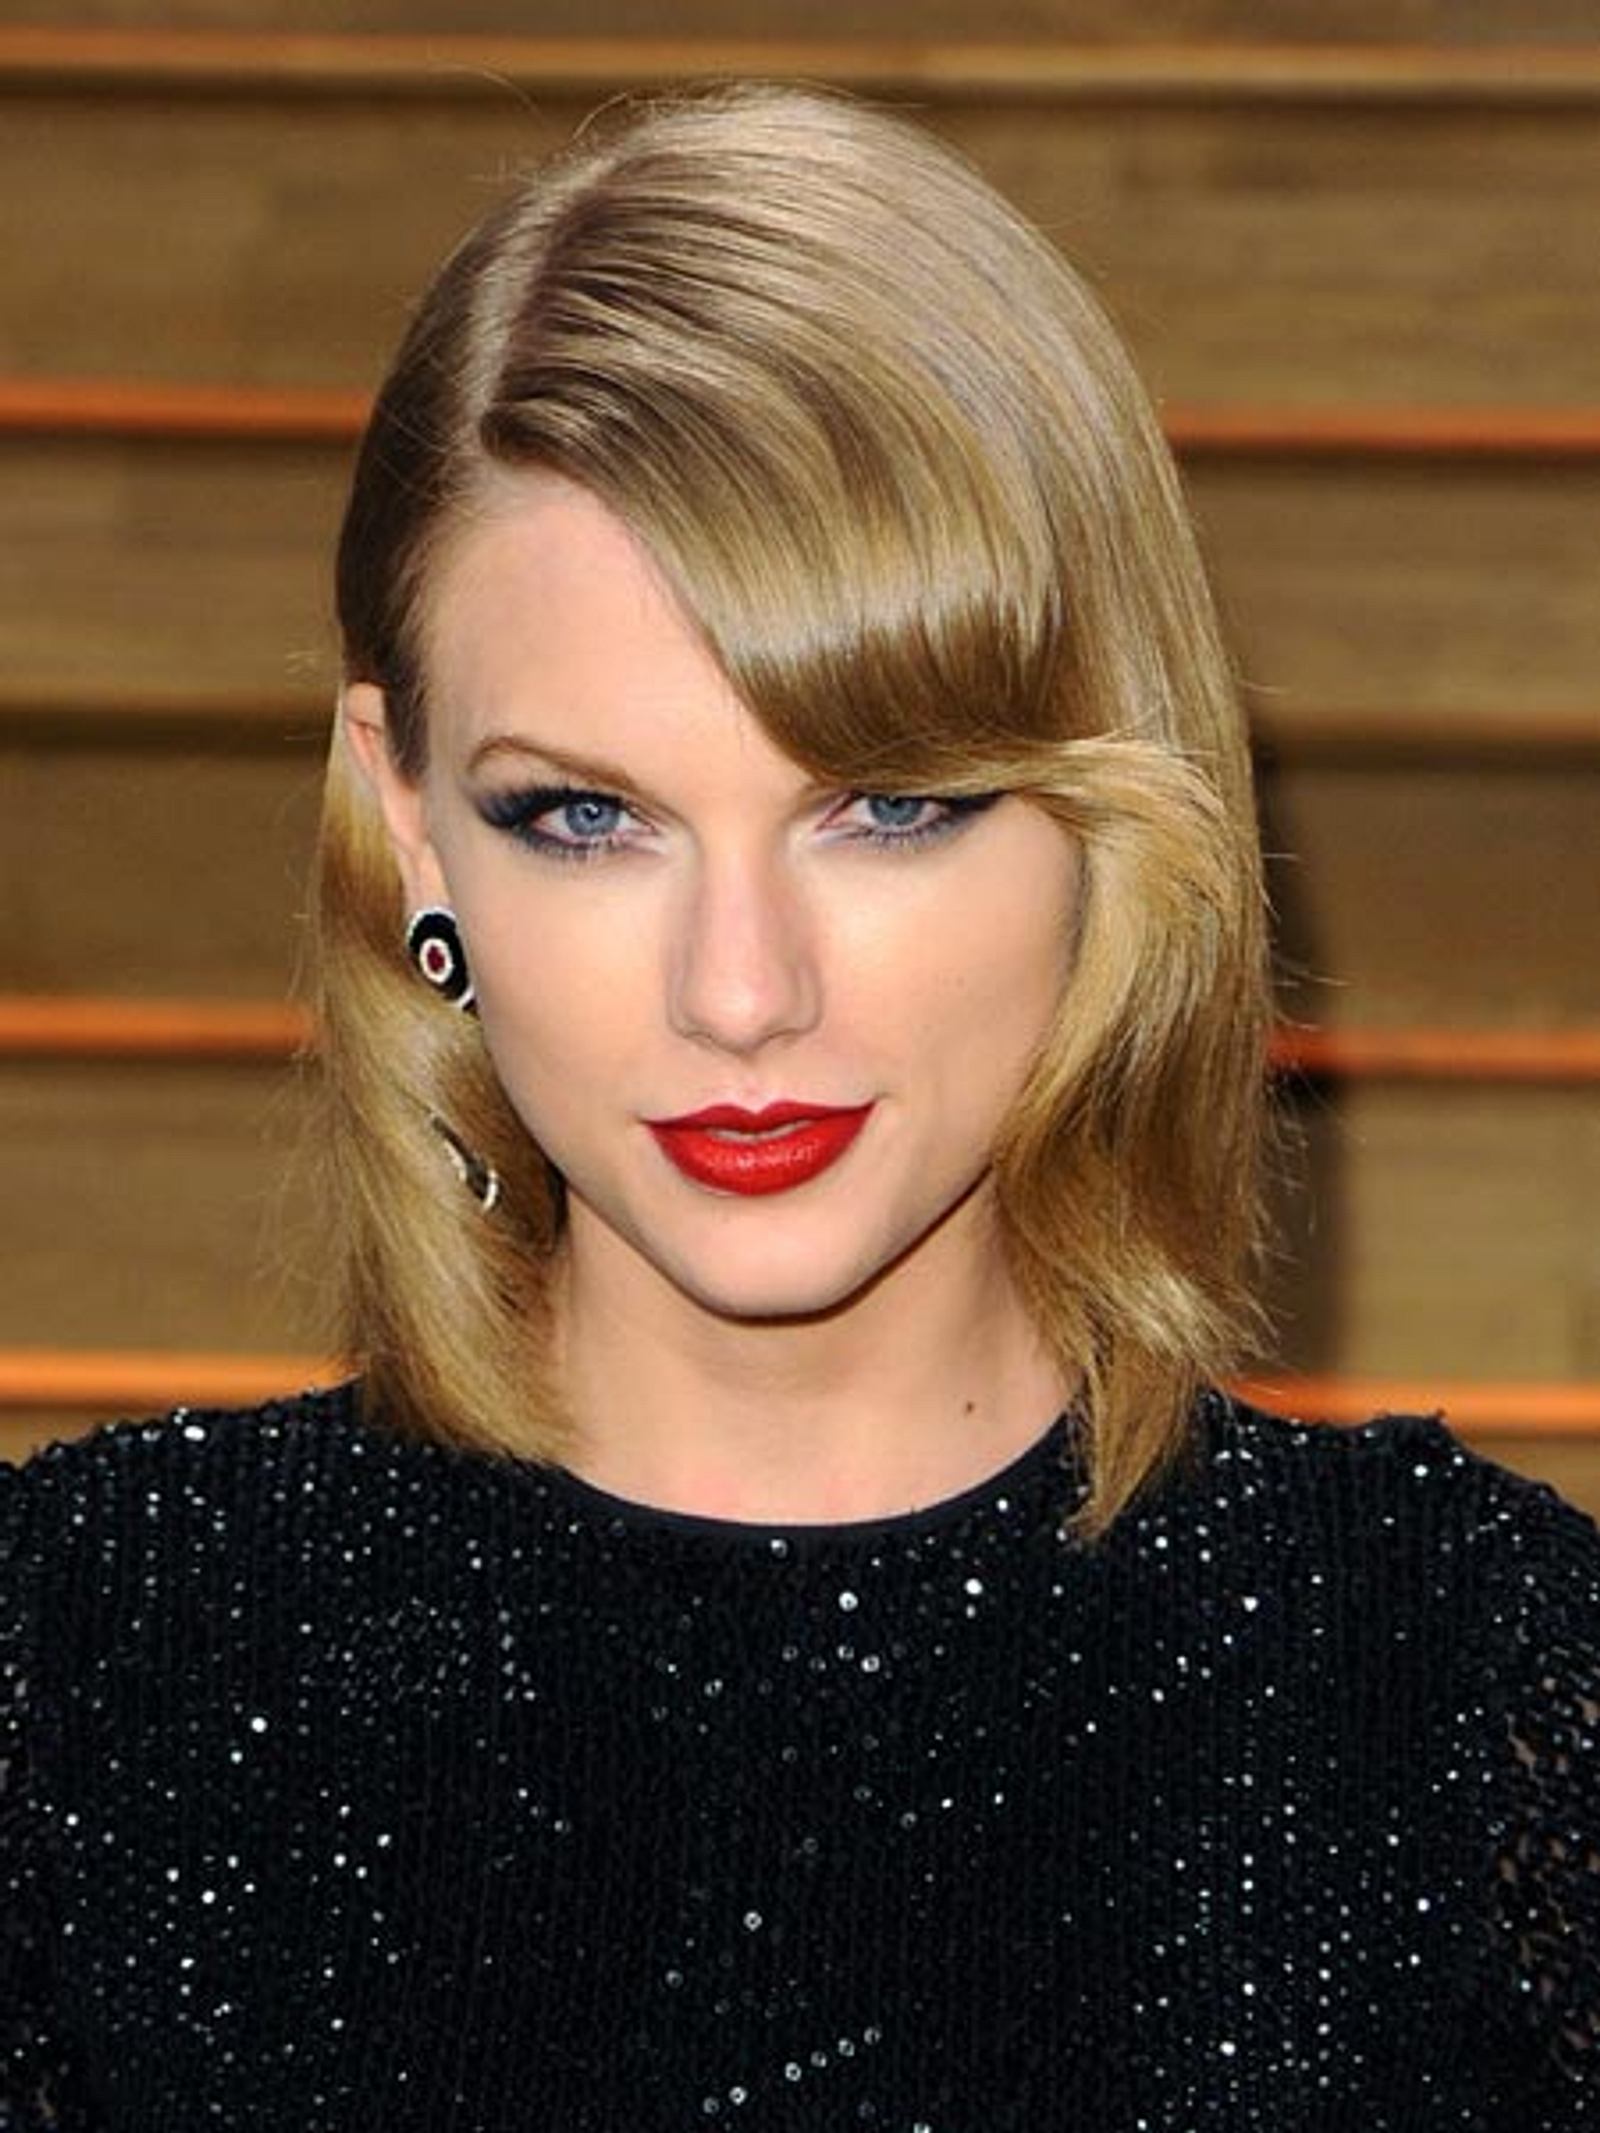 Taylor Swift Ungeschminkt / 10 Taylor Swift (T-Swizzle) without Makeup ...